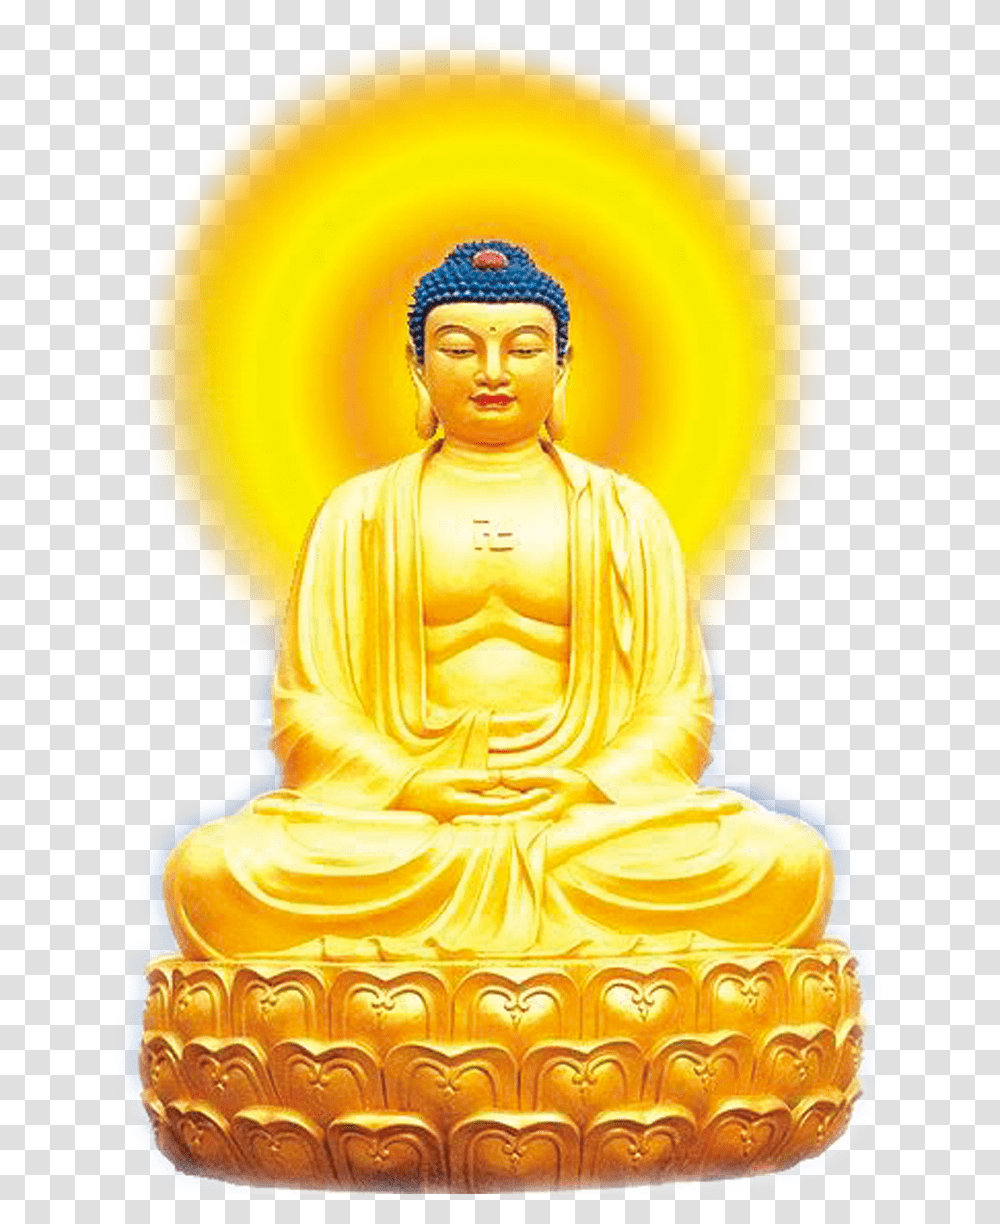 Bodh Gaya Square Buddhism Animation Wallpaper Image, Worship, Buddha, Birthday Cake Transparent Png